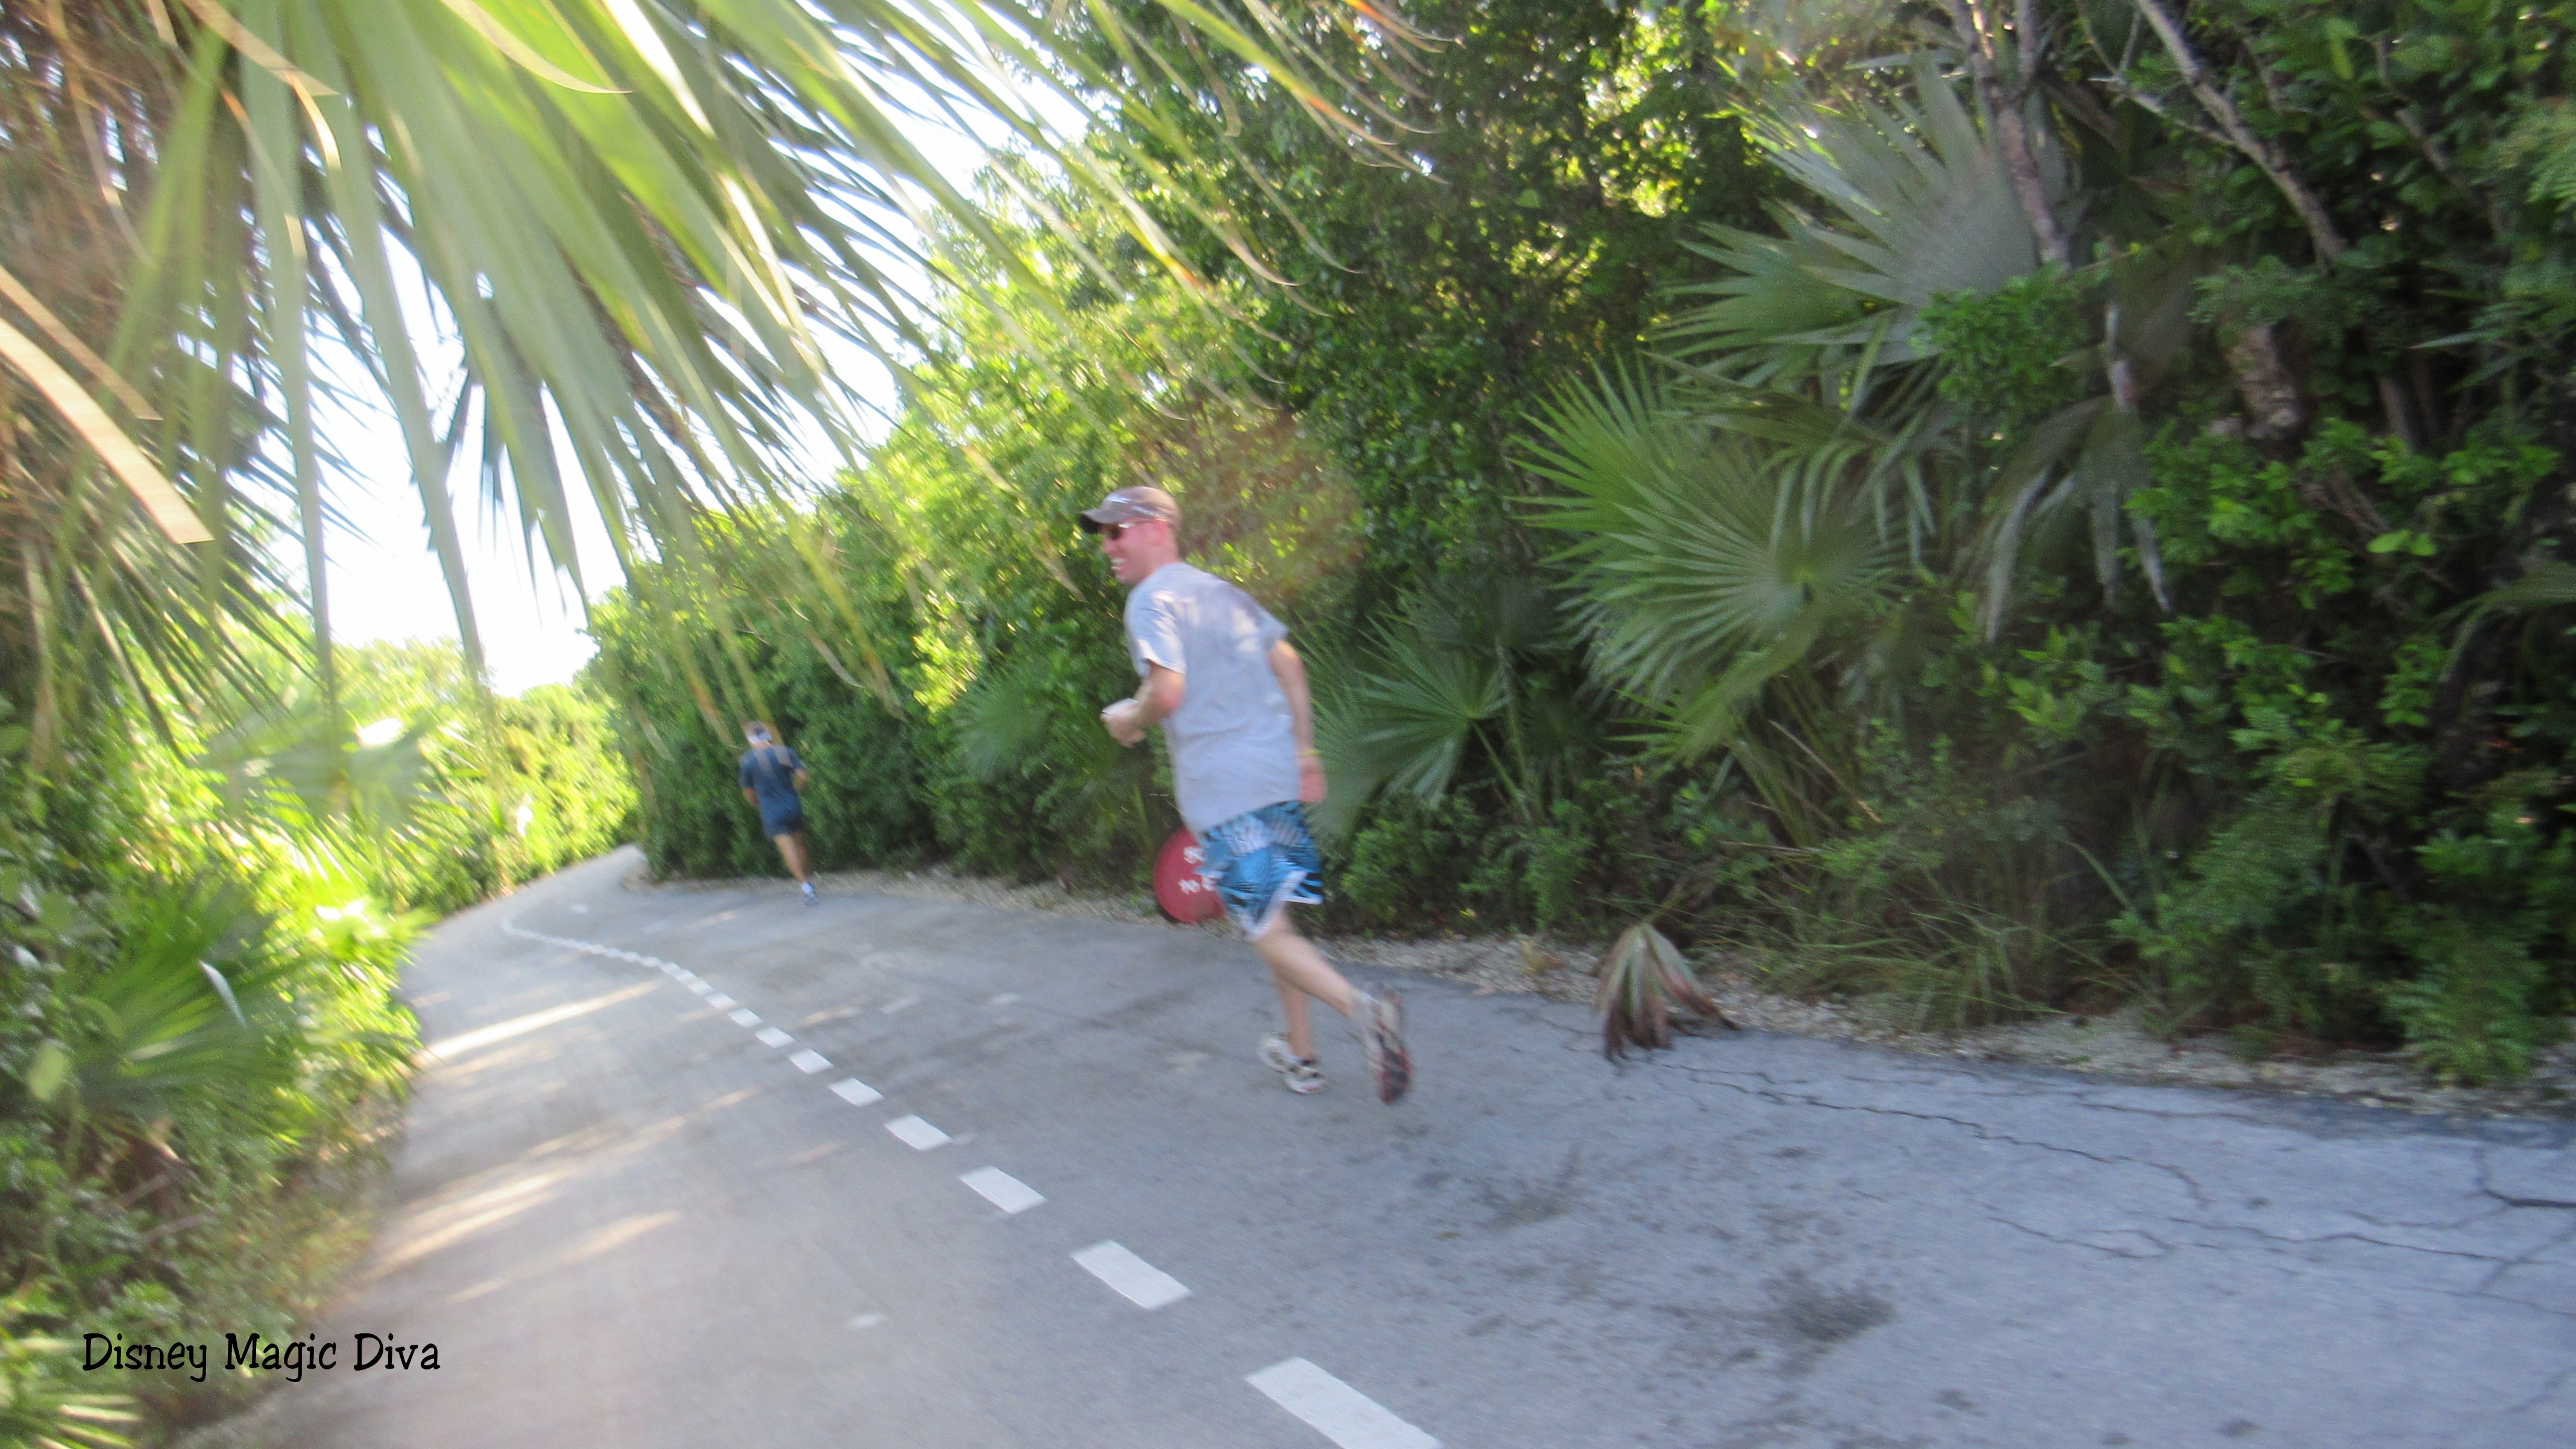 The Castaway Cay 5k: A runDisney Race in Paradise